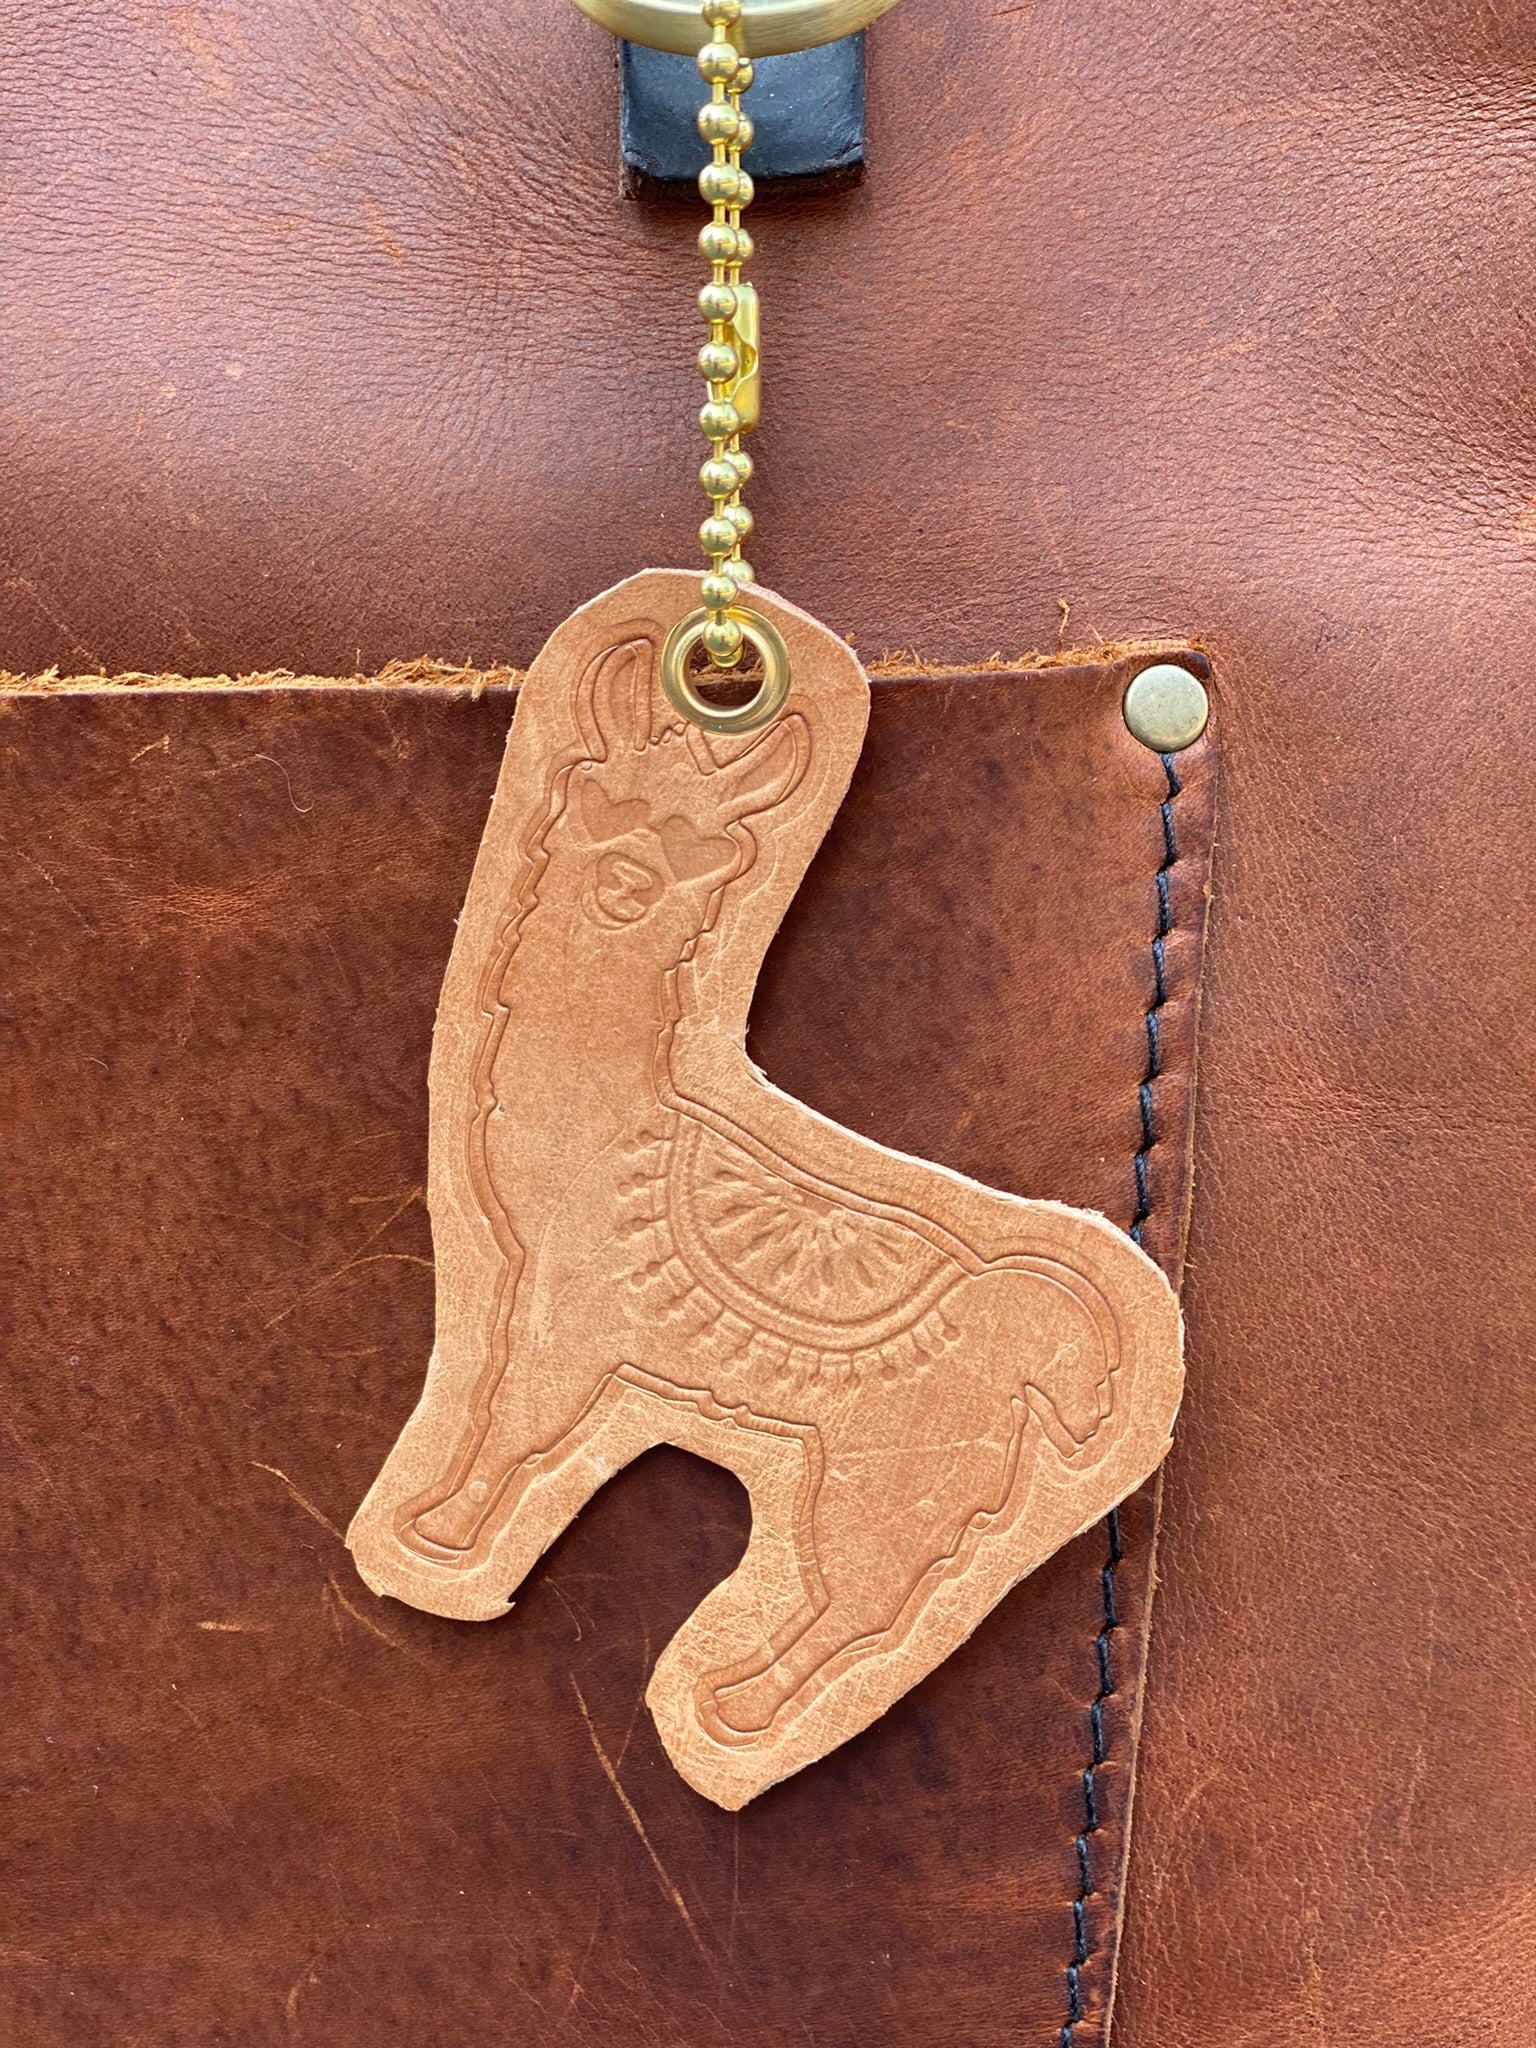 Embossed Leather Die Cut Llama Alpaca Charm Purse Bag Backpack Vegetable Tanned Ball Chain Keyring Key Fob